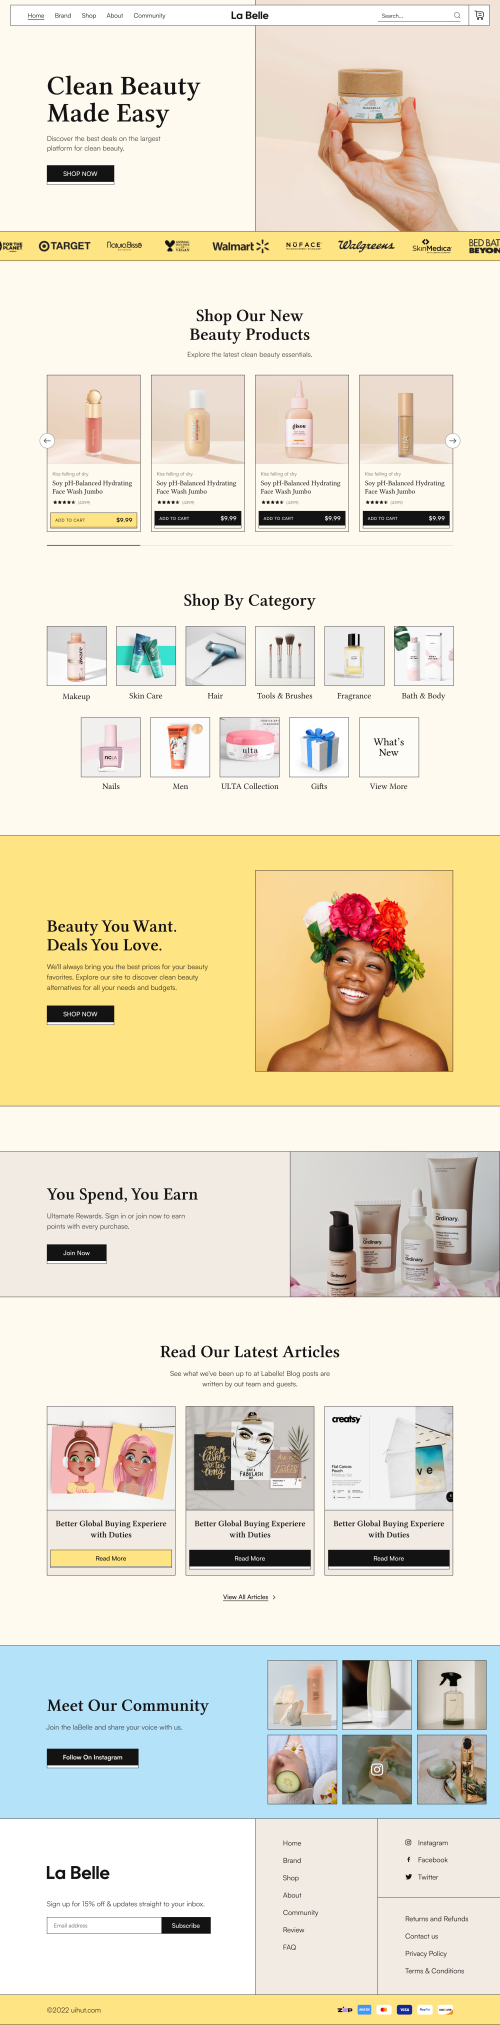 UIHut - Beauty Product Website Design - 20140